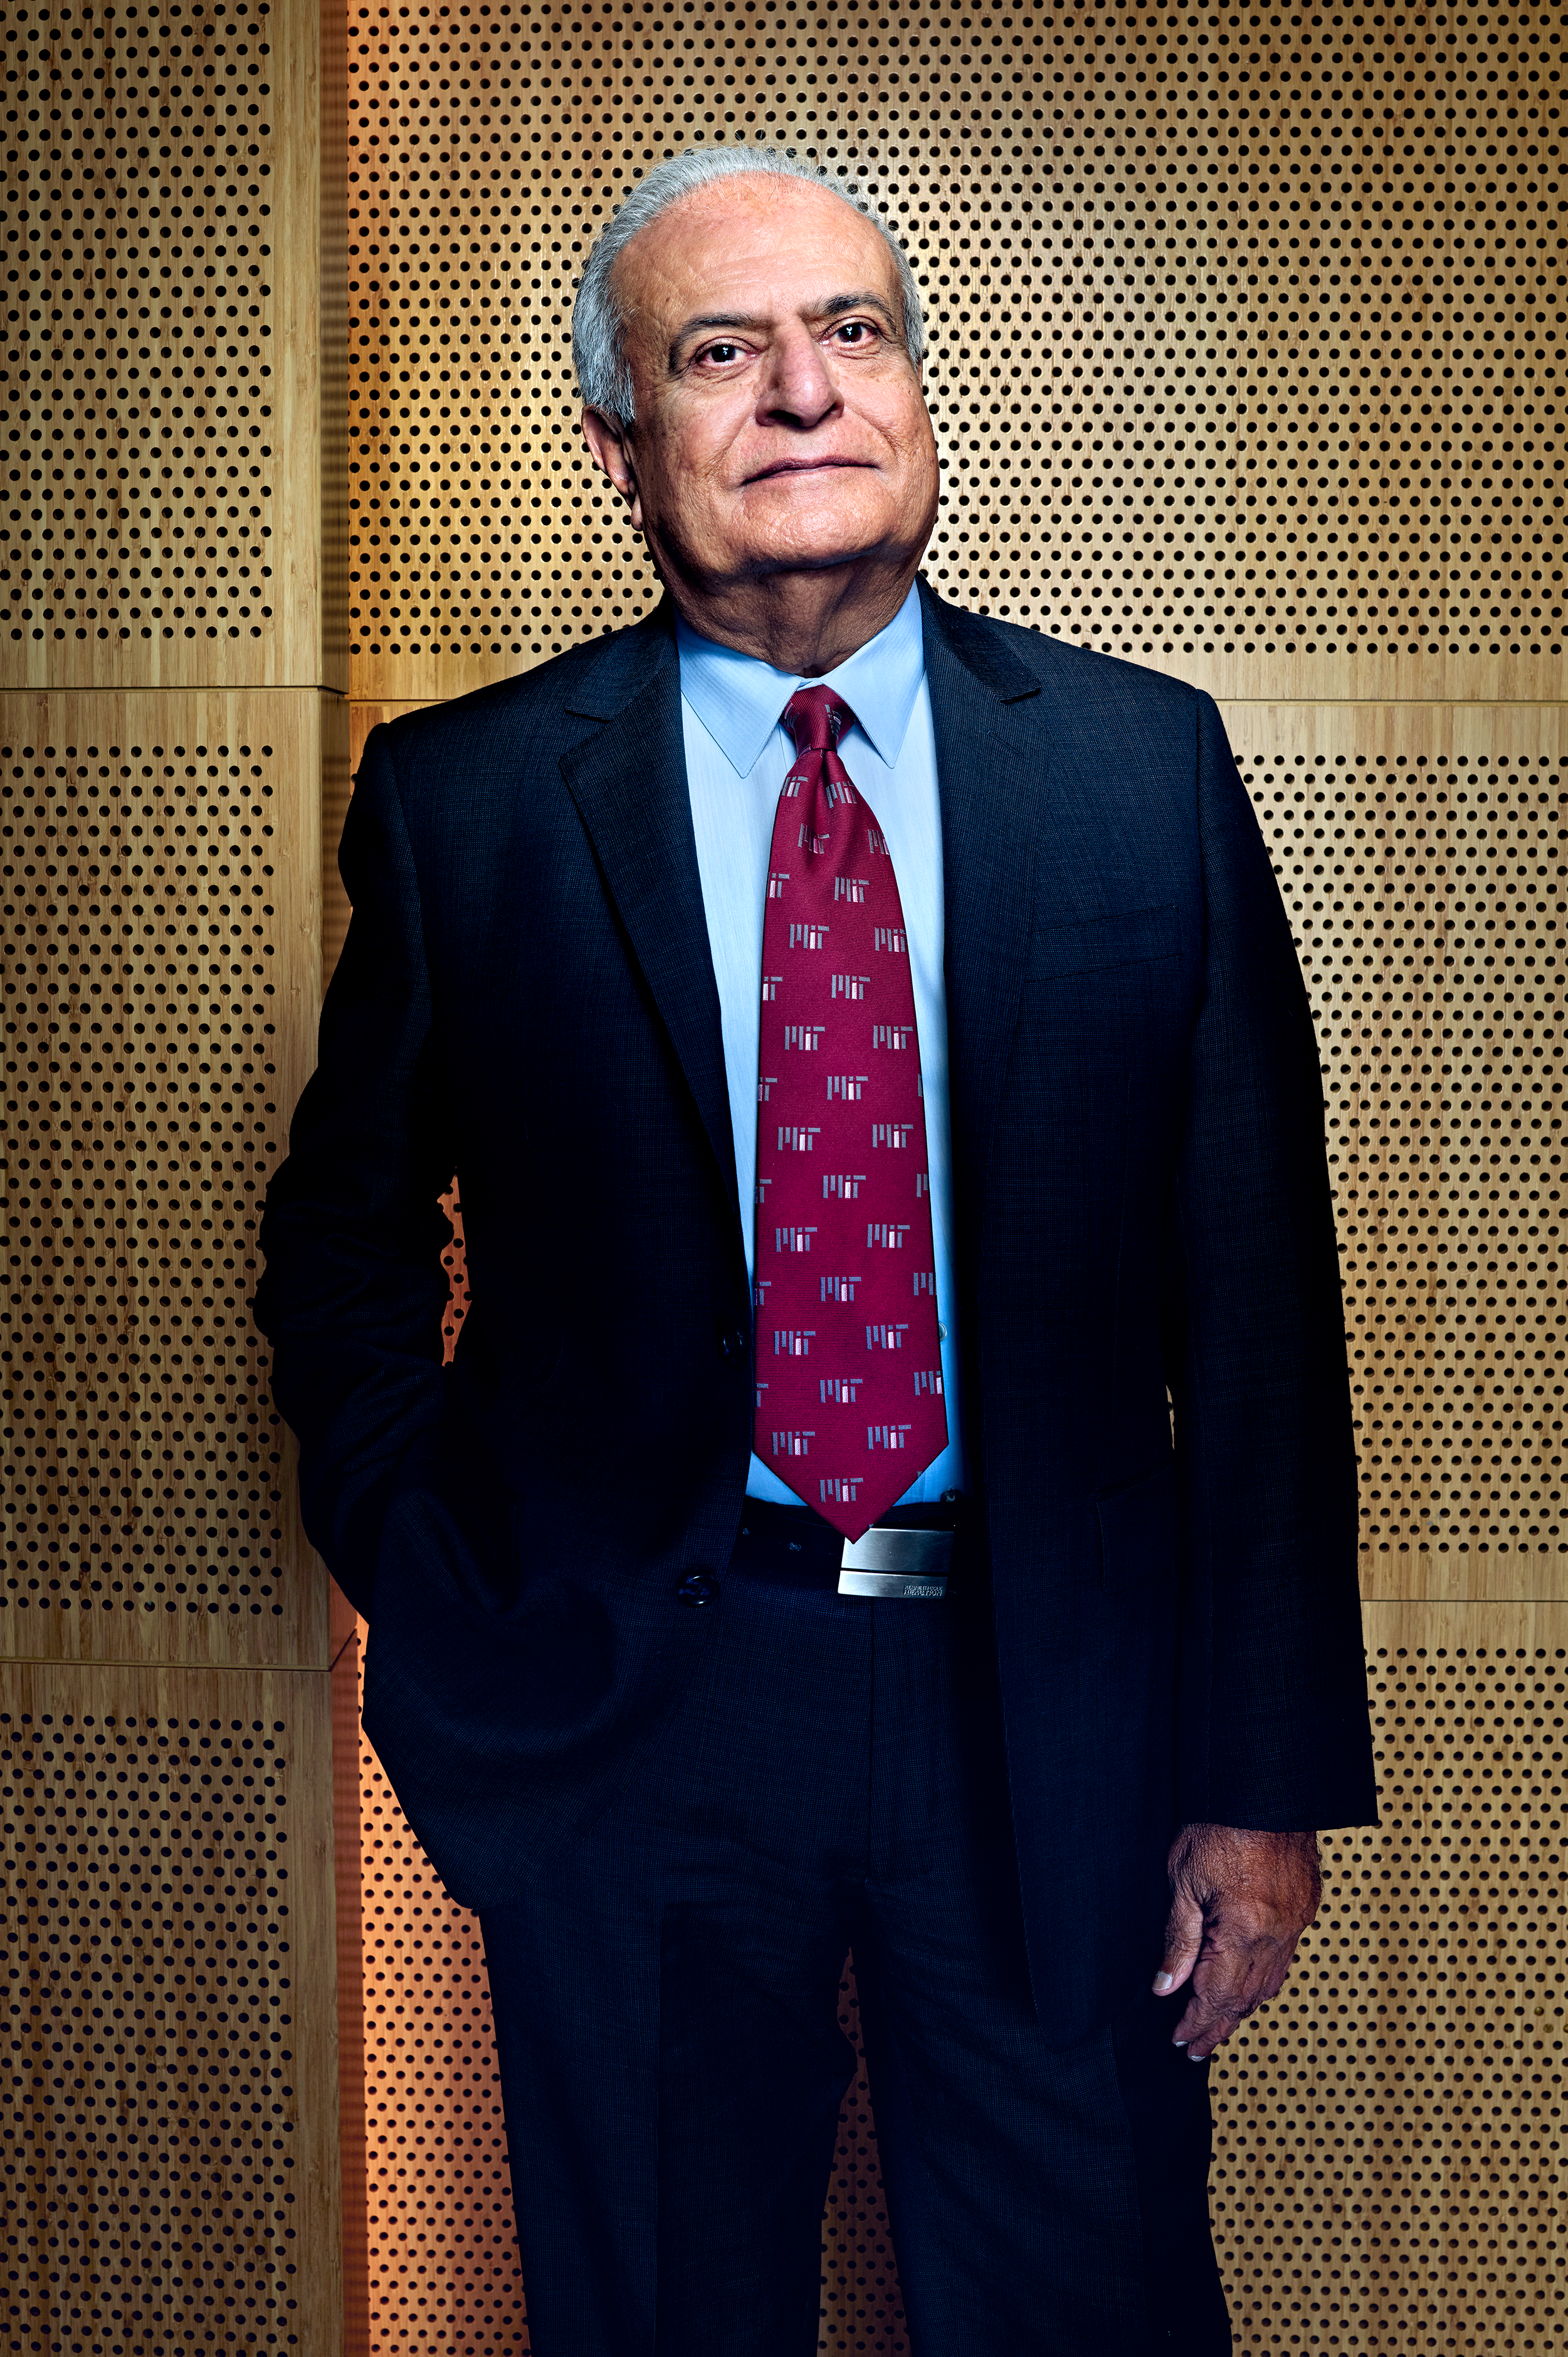 A photo of a man in a dark suit in front of a wooden background.  